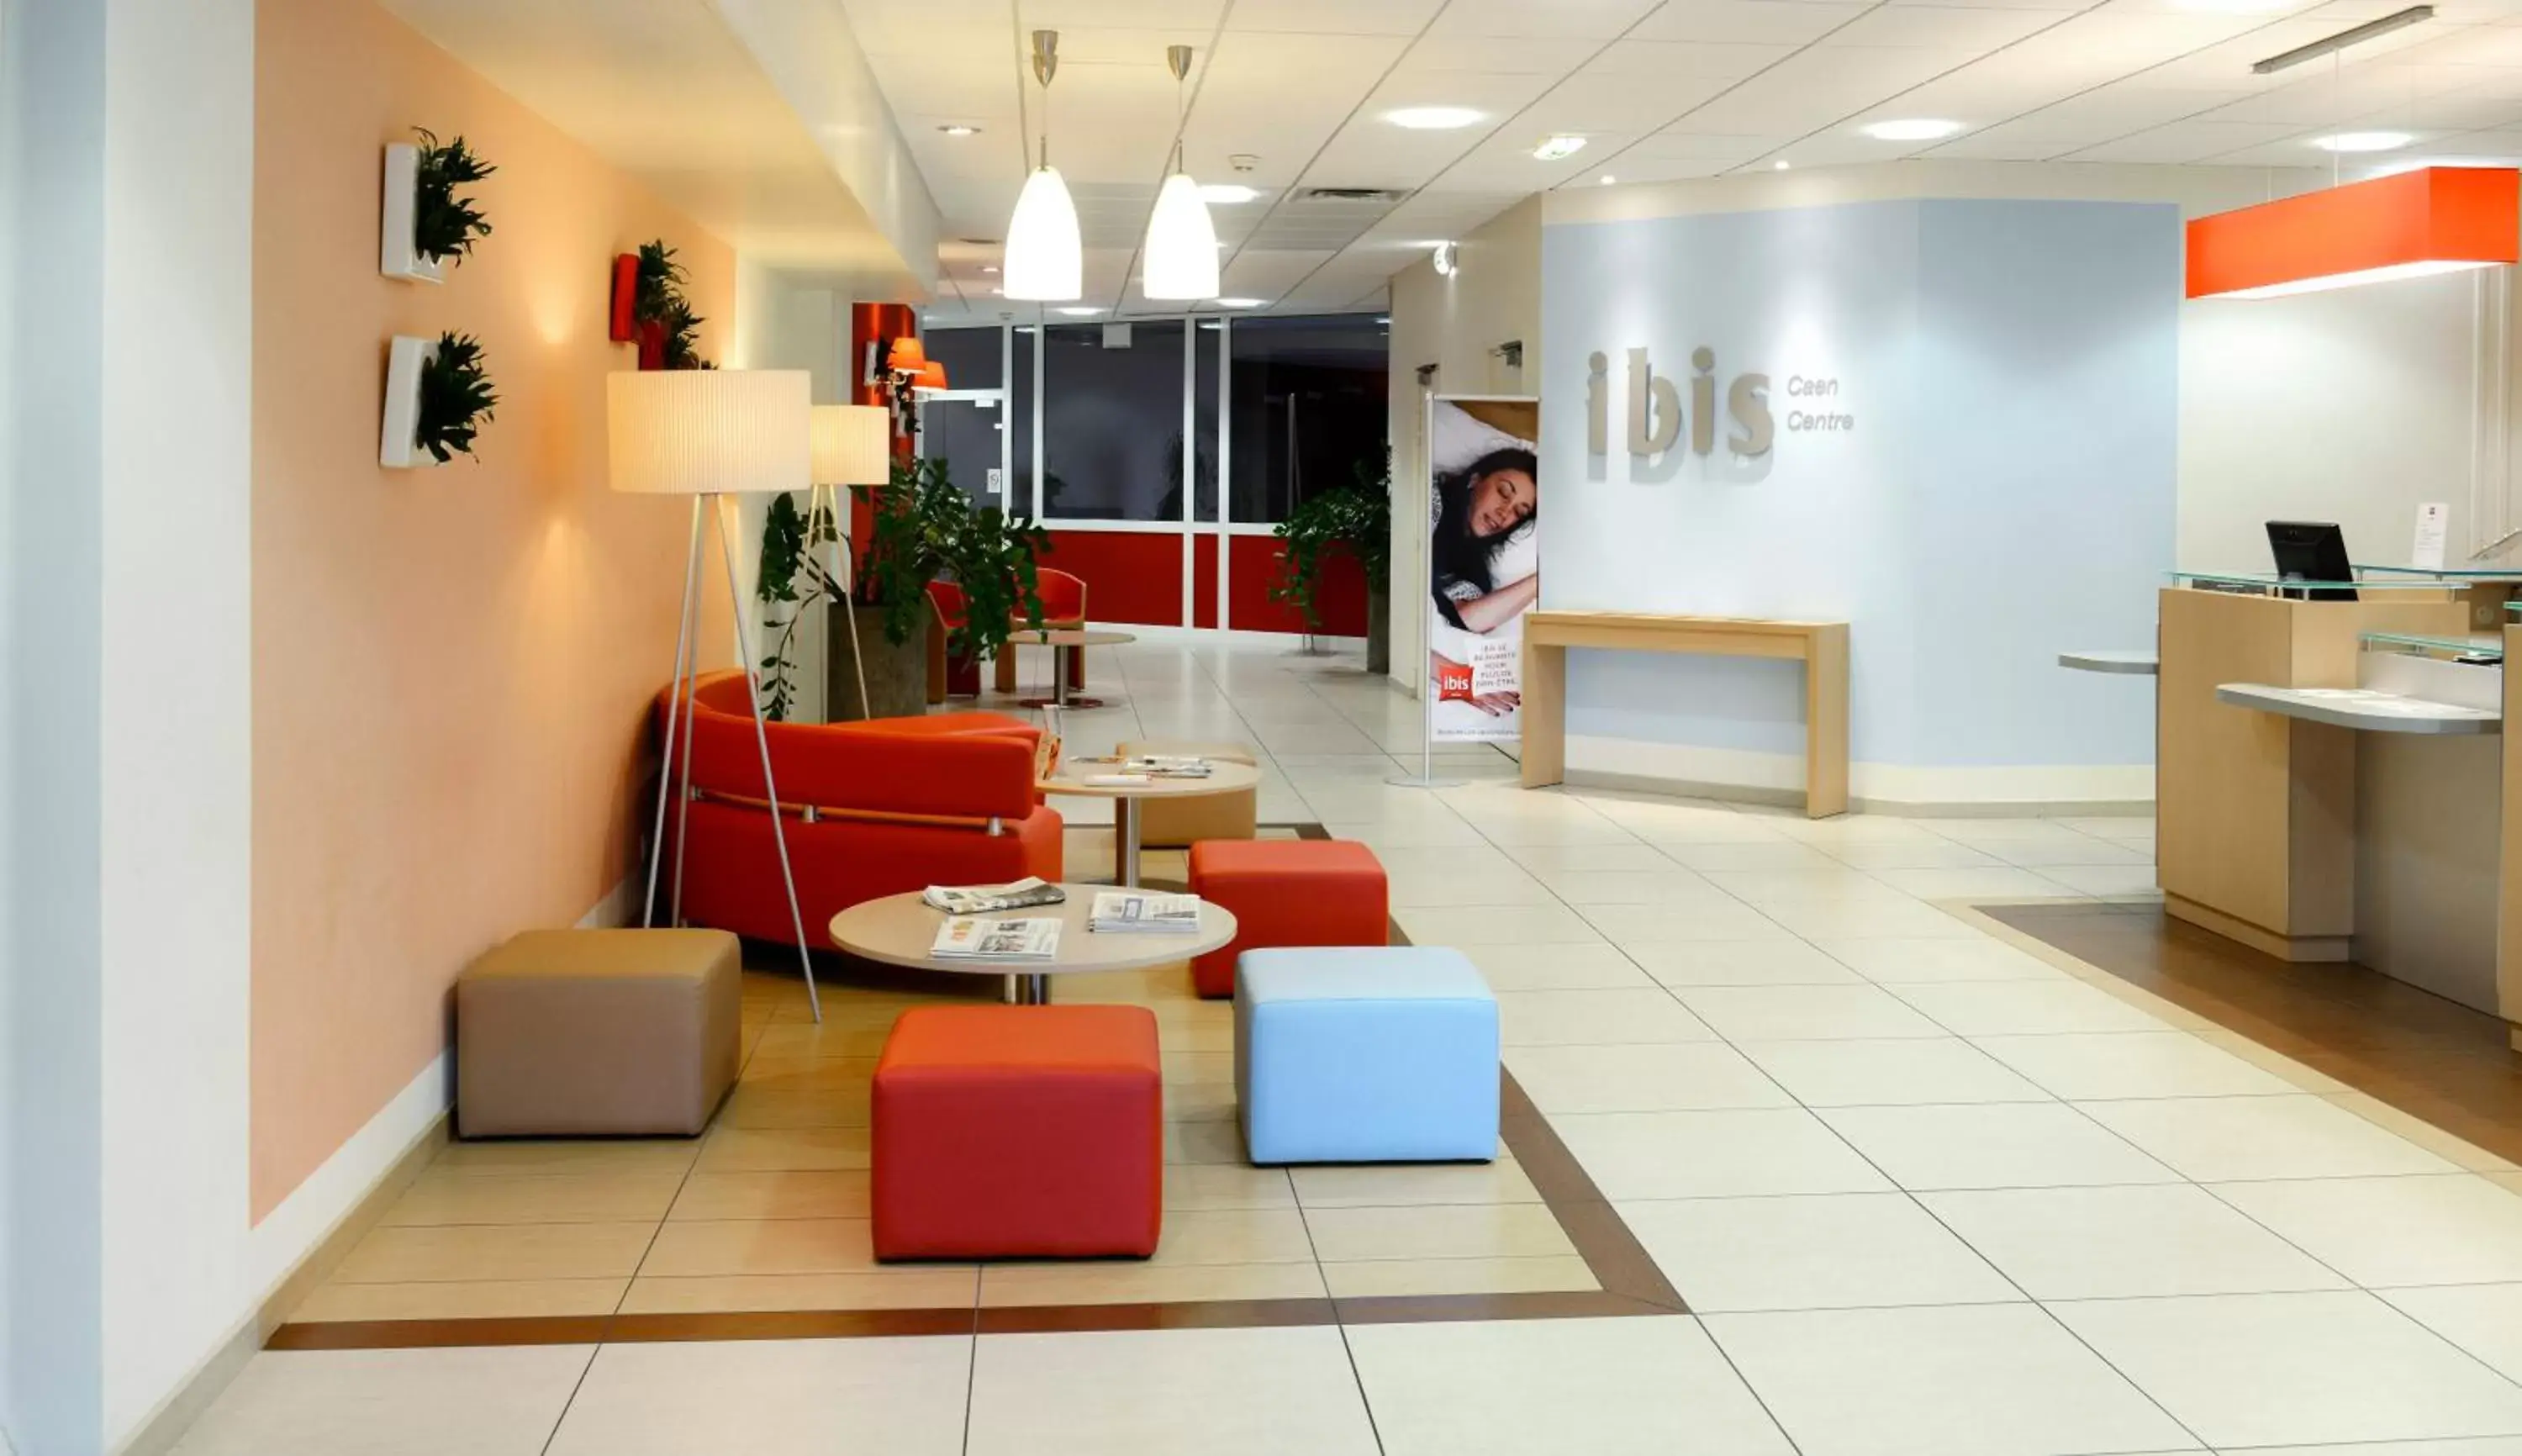 Lobby or reception in IBIS Caen Centre